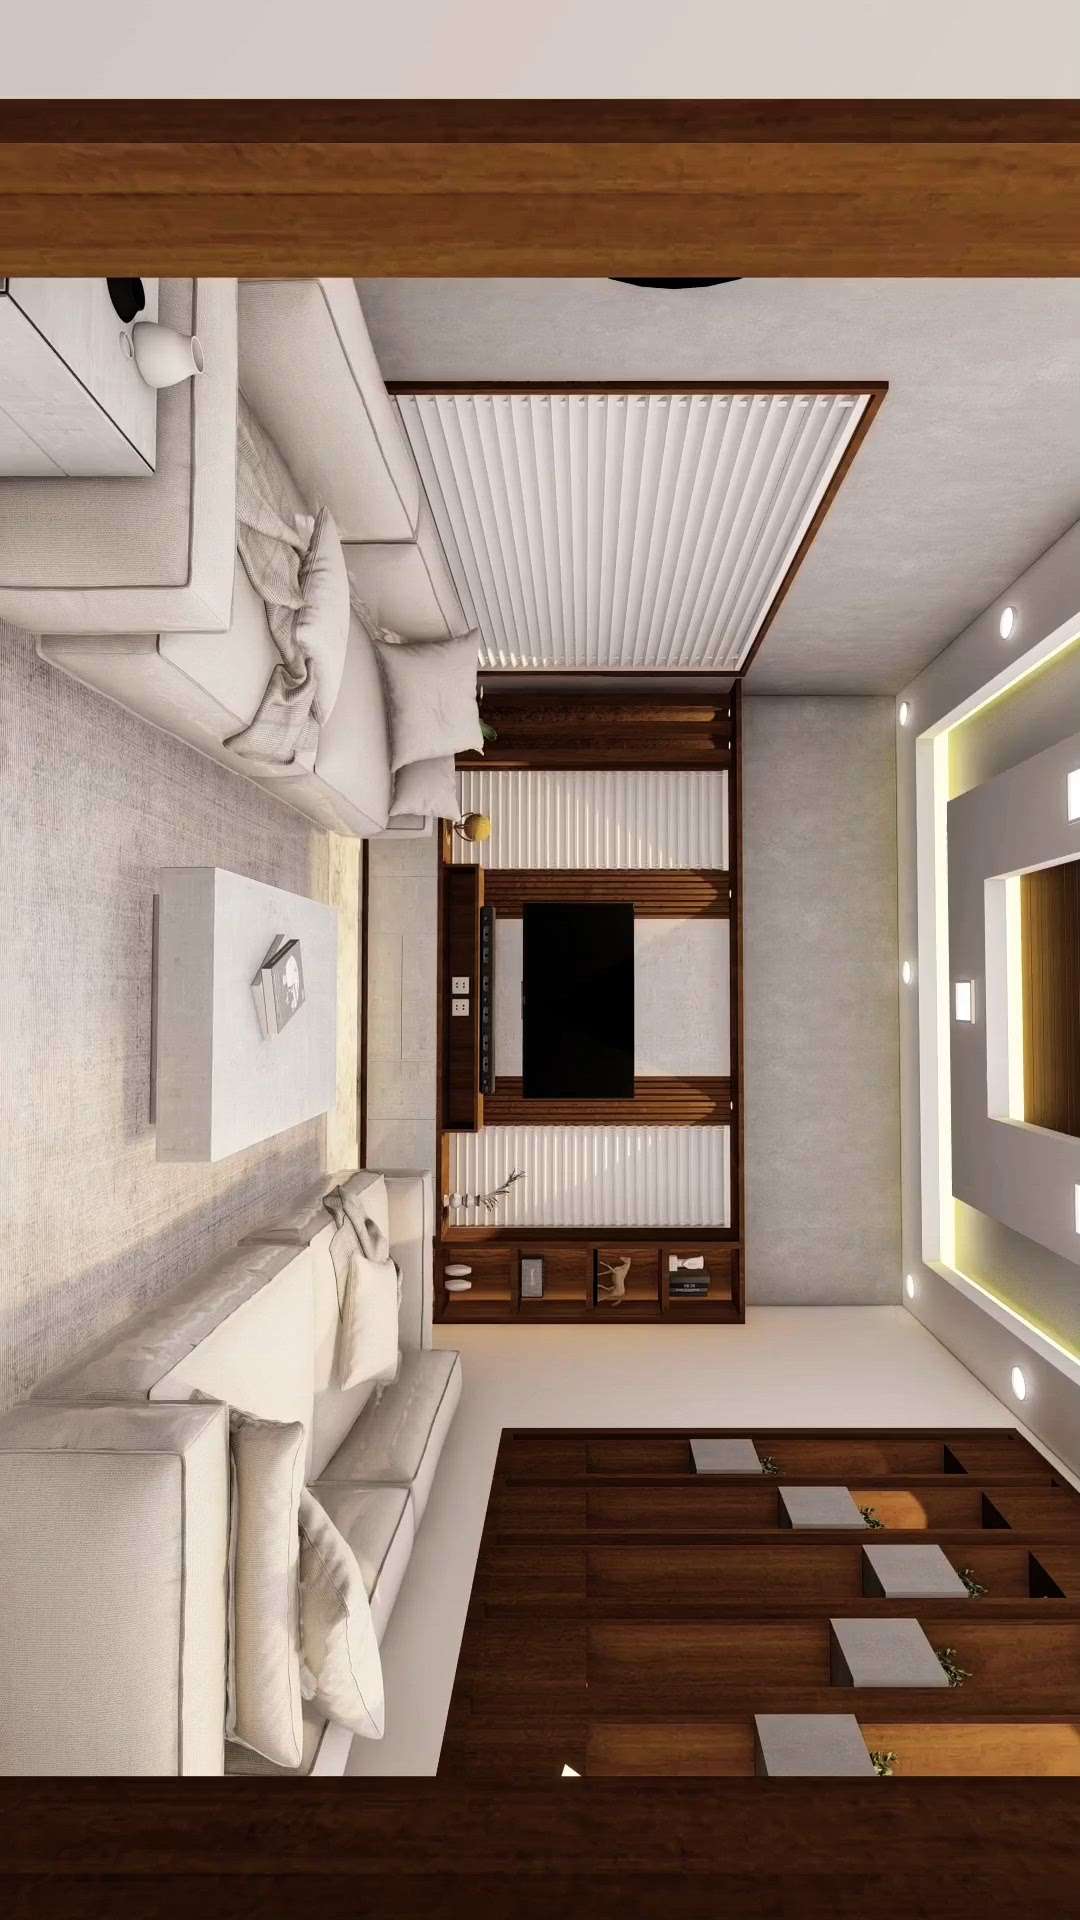 New Project animated walkthrough rendering. 
#InteriorDesigner #LivingroomDesigns #Kollam #DiningTable #diningroom